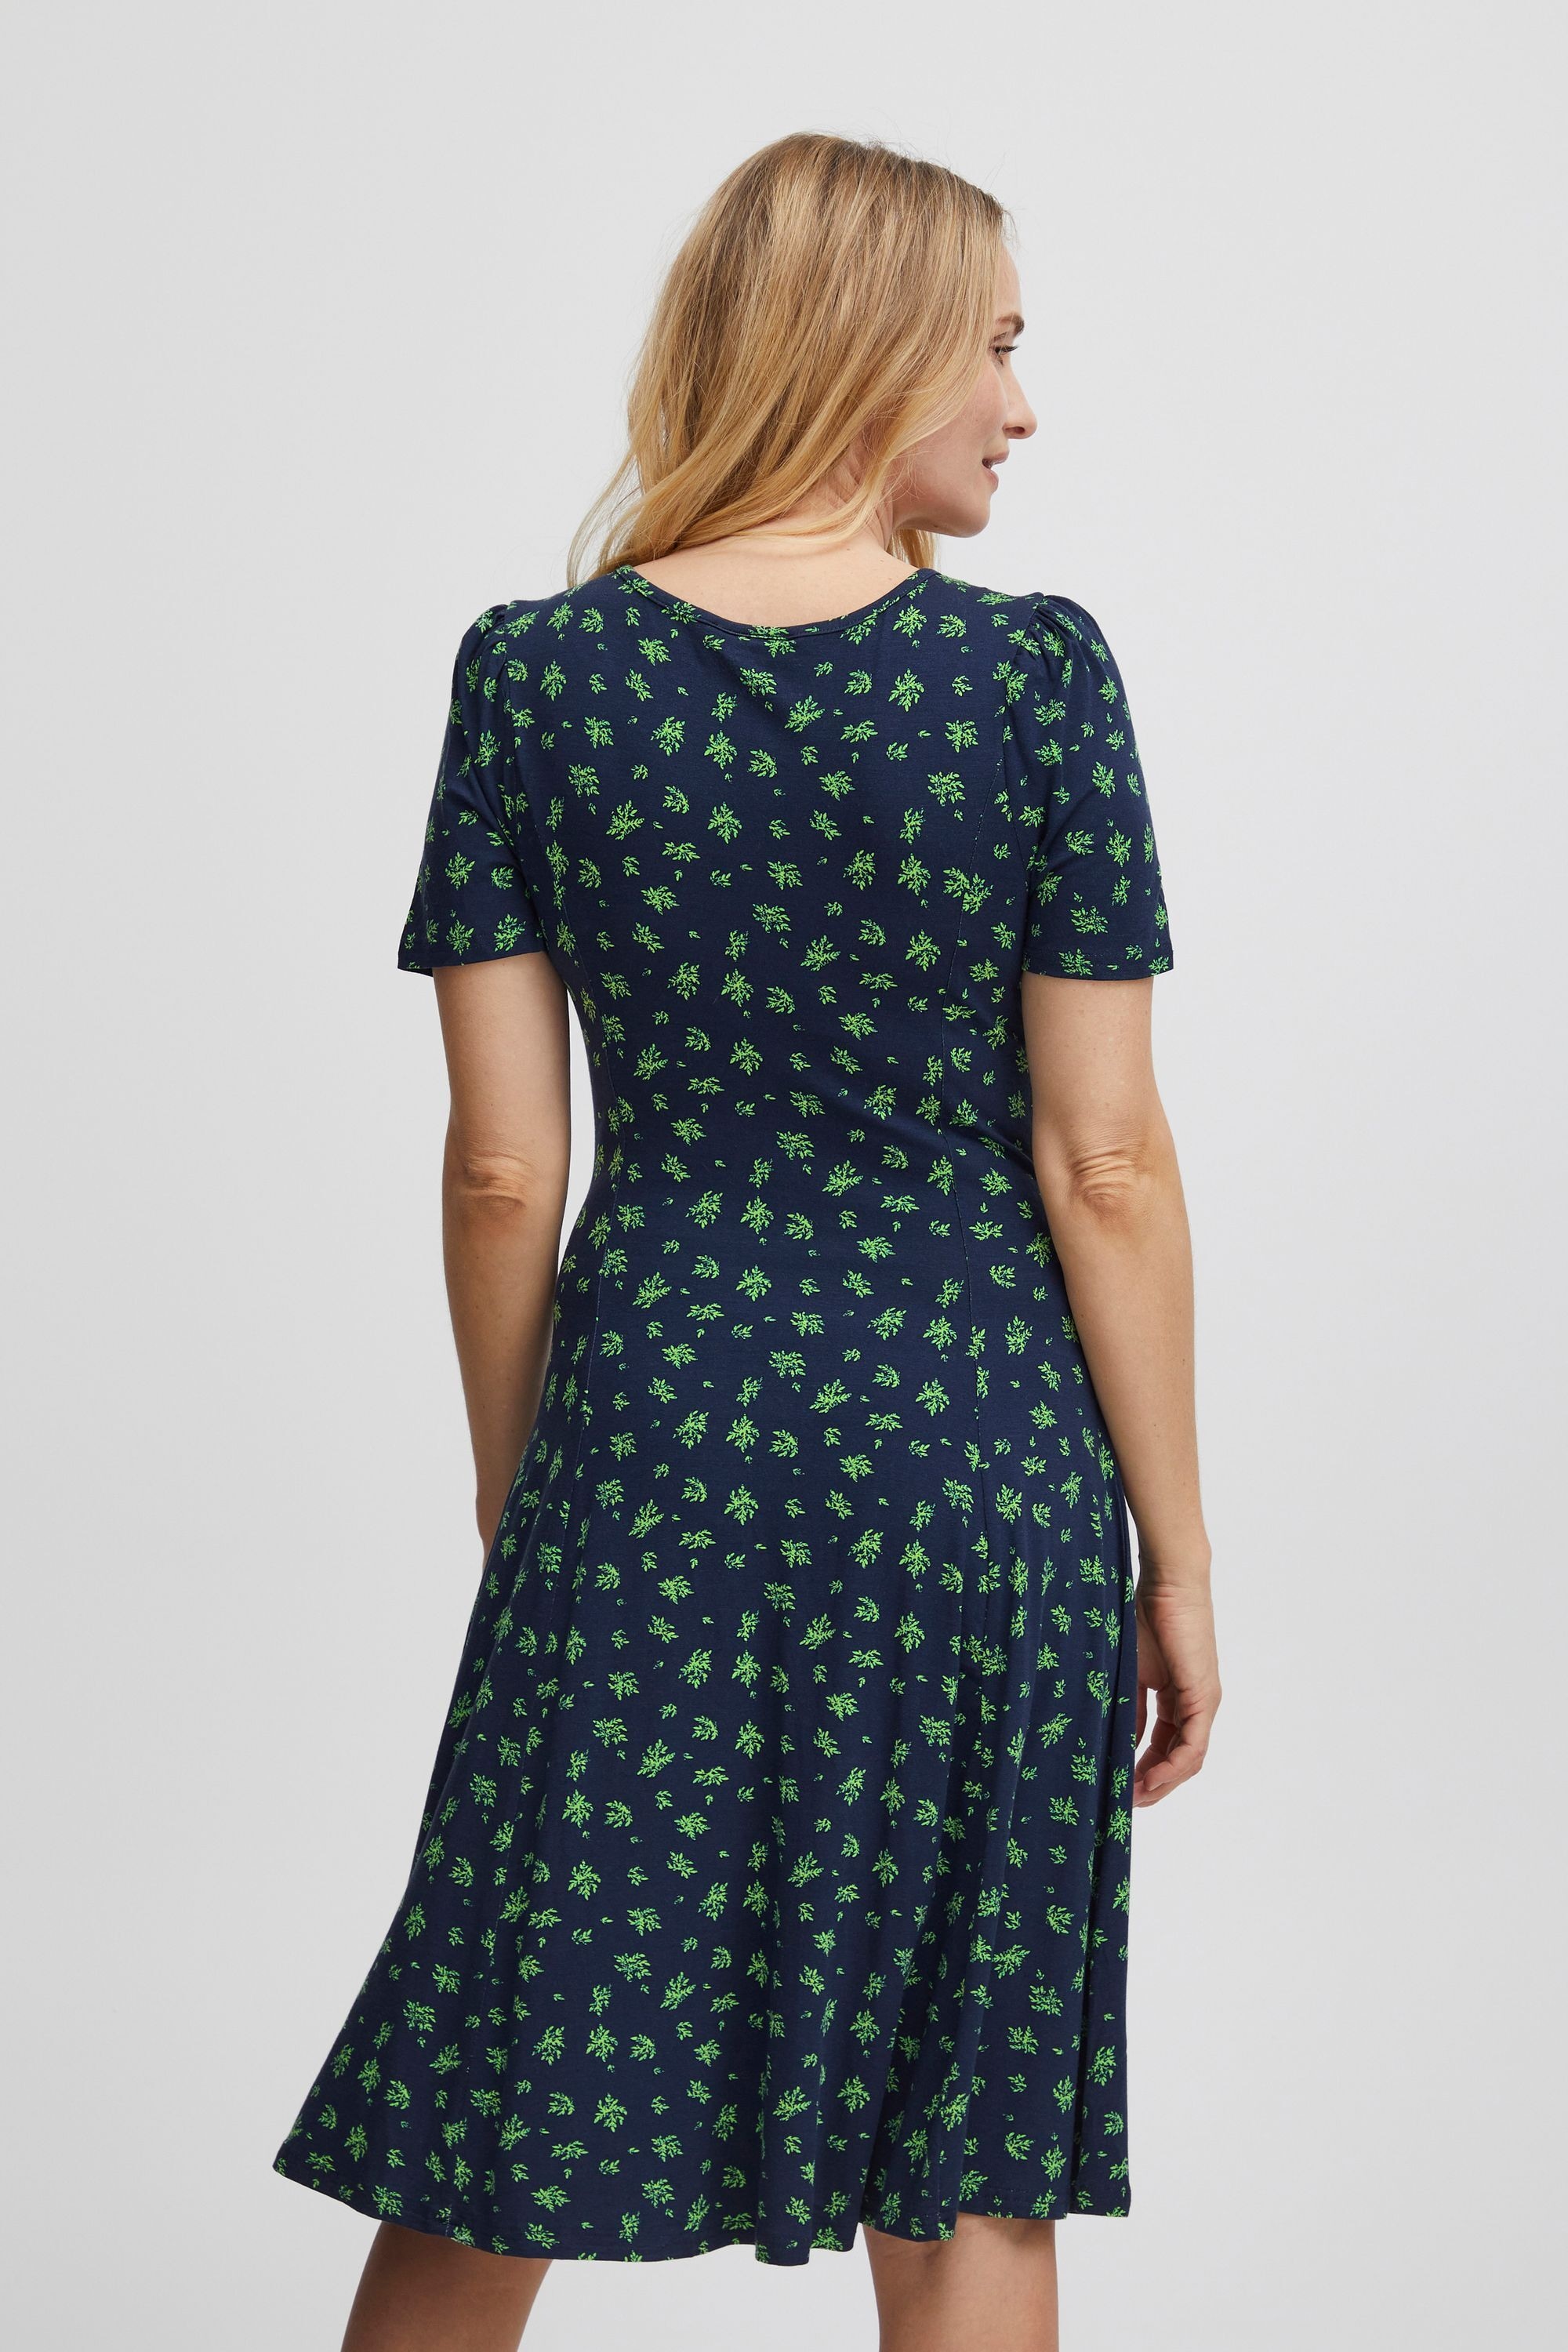 | fransa 1 kaufen »Fransa walking Jerseykleid Dress« I\'m FRFEDOT online